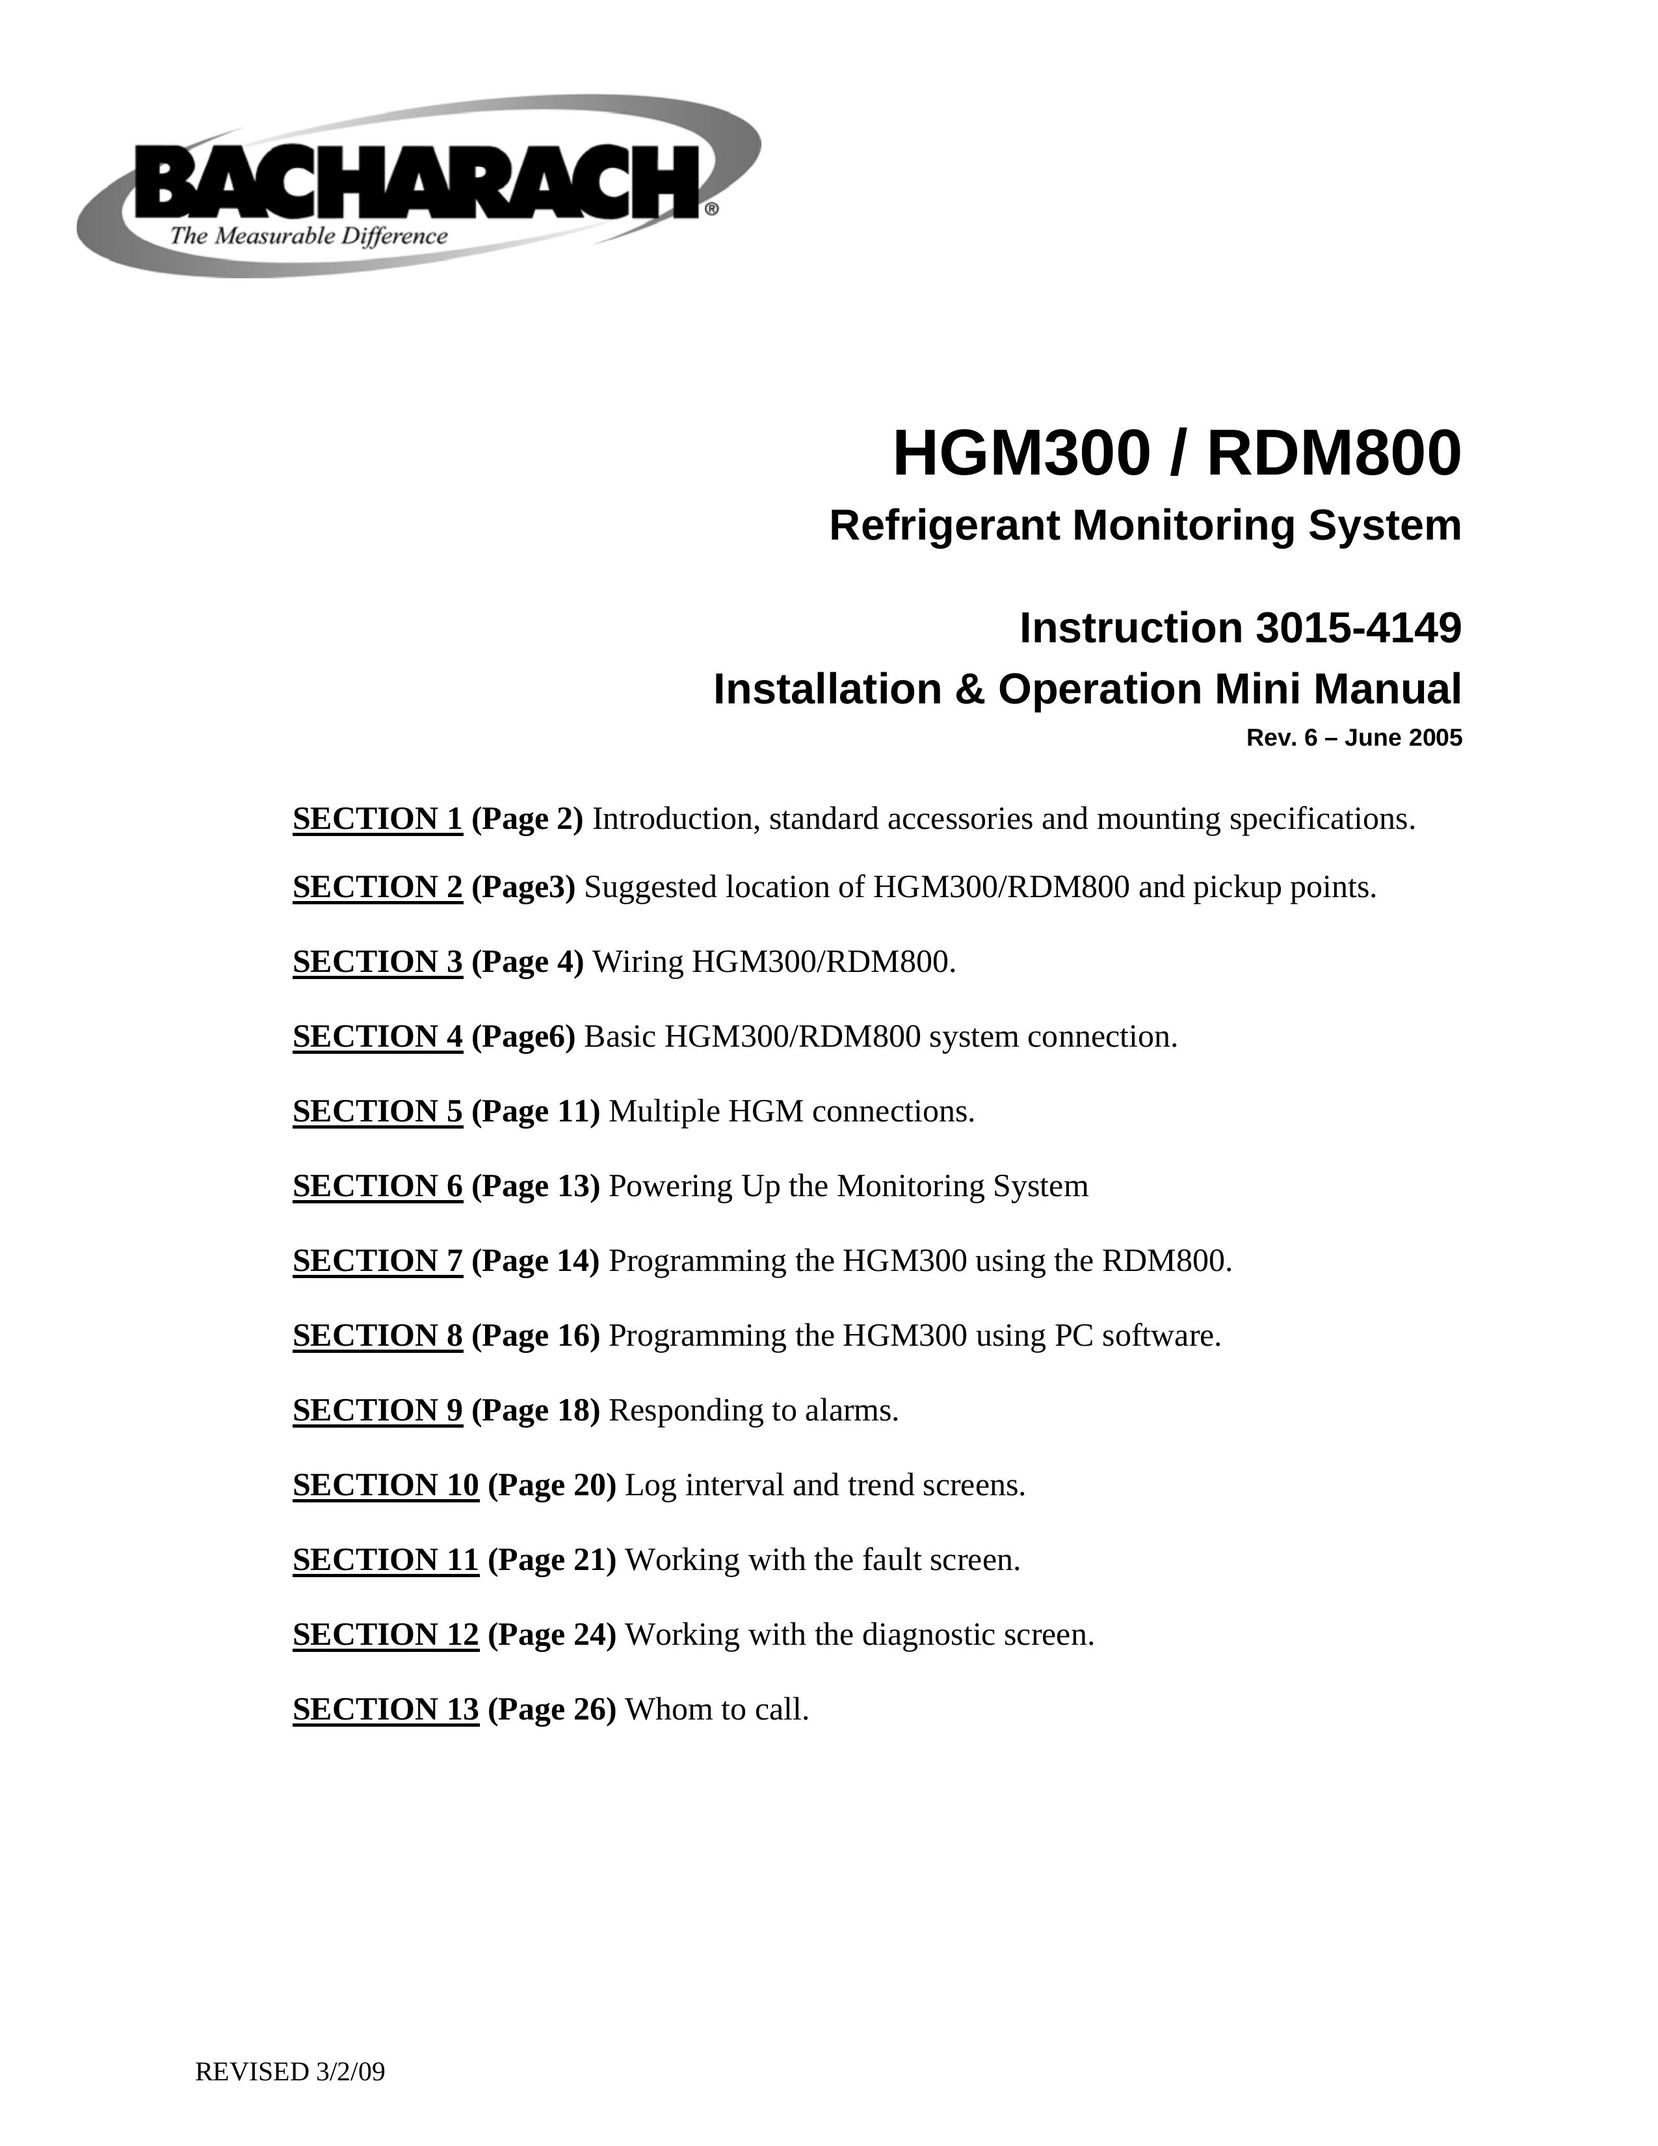 Bacharach RDM800 Carbon Monoxide Alarm User Manual